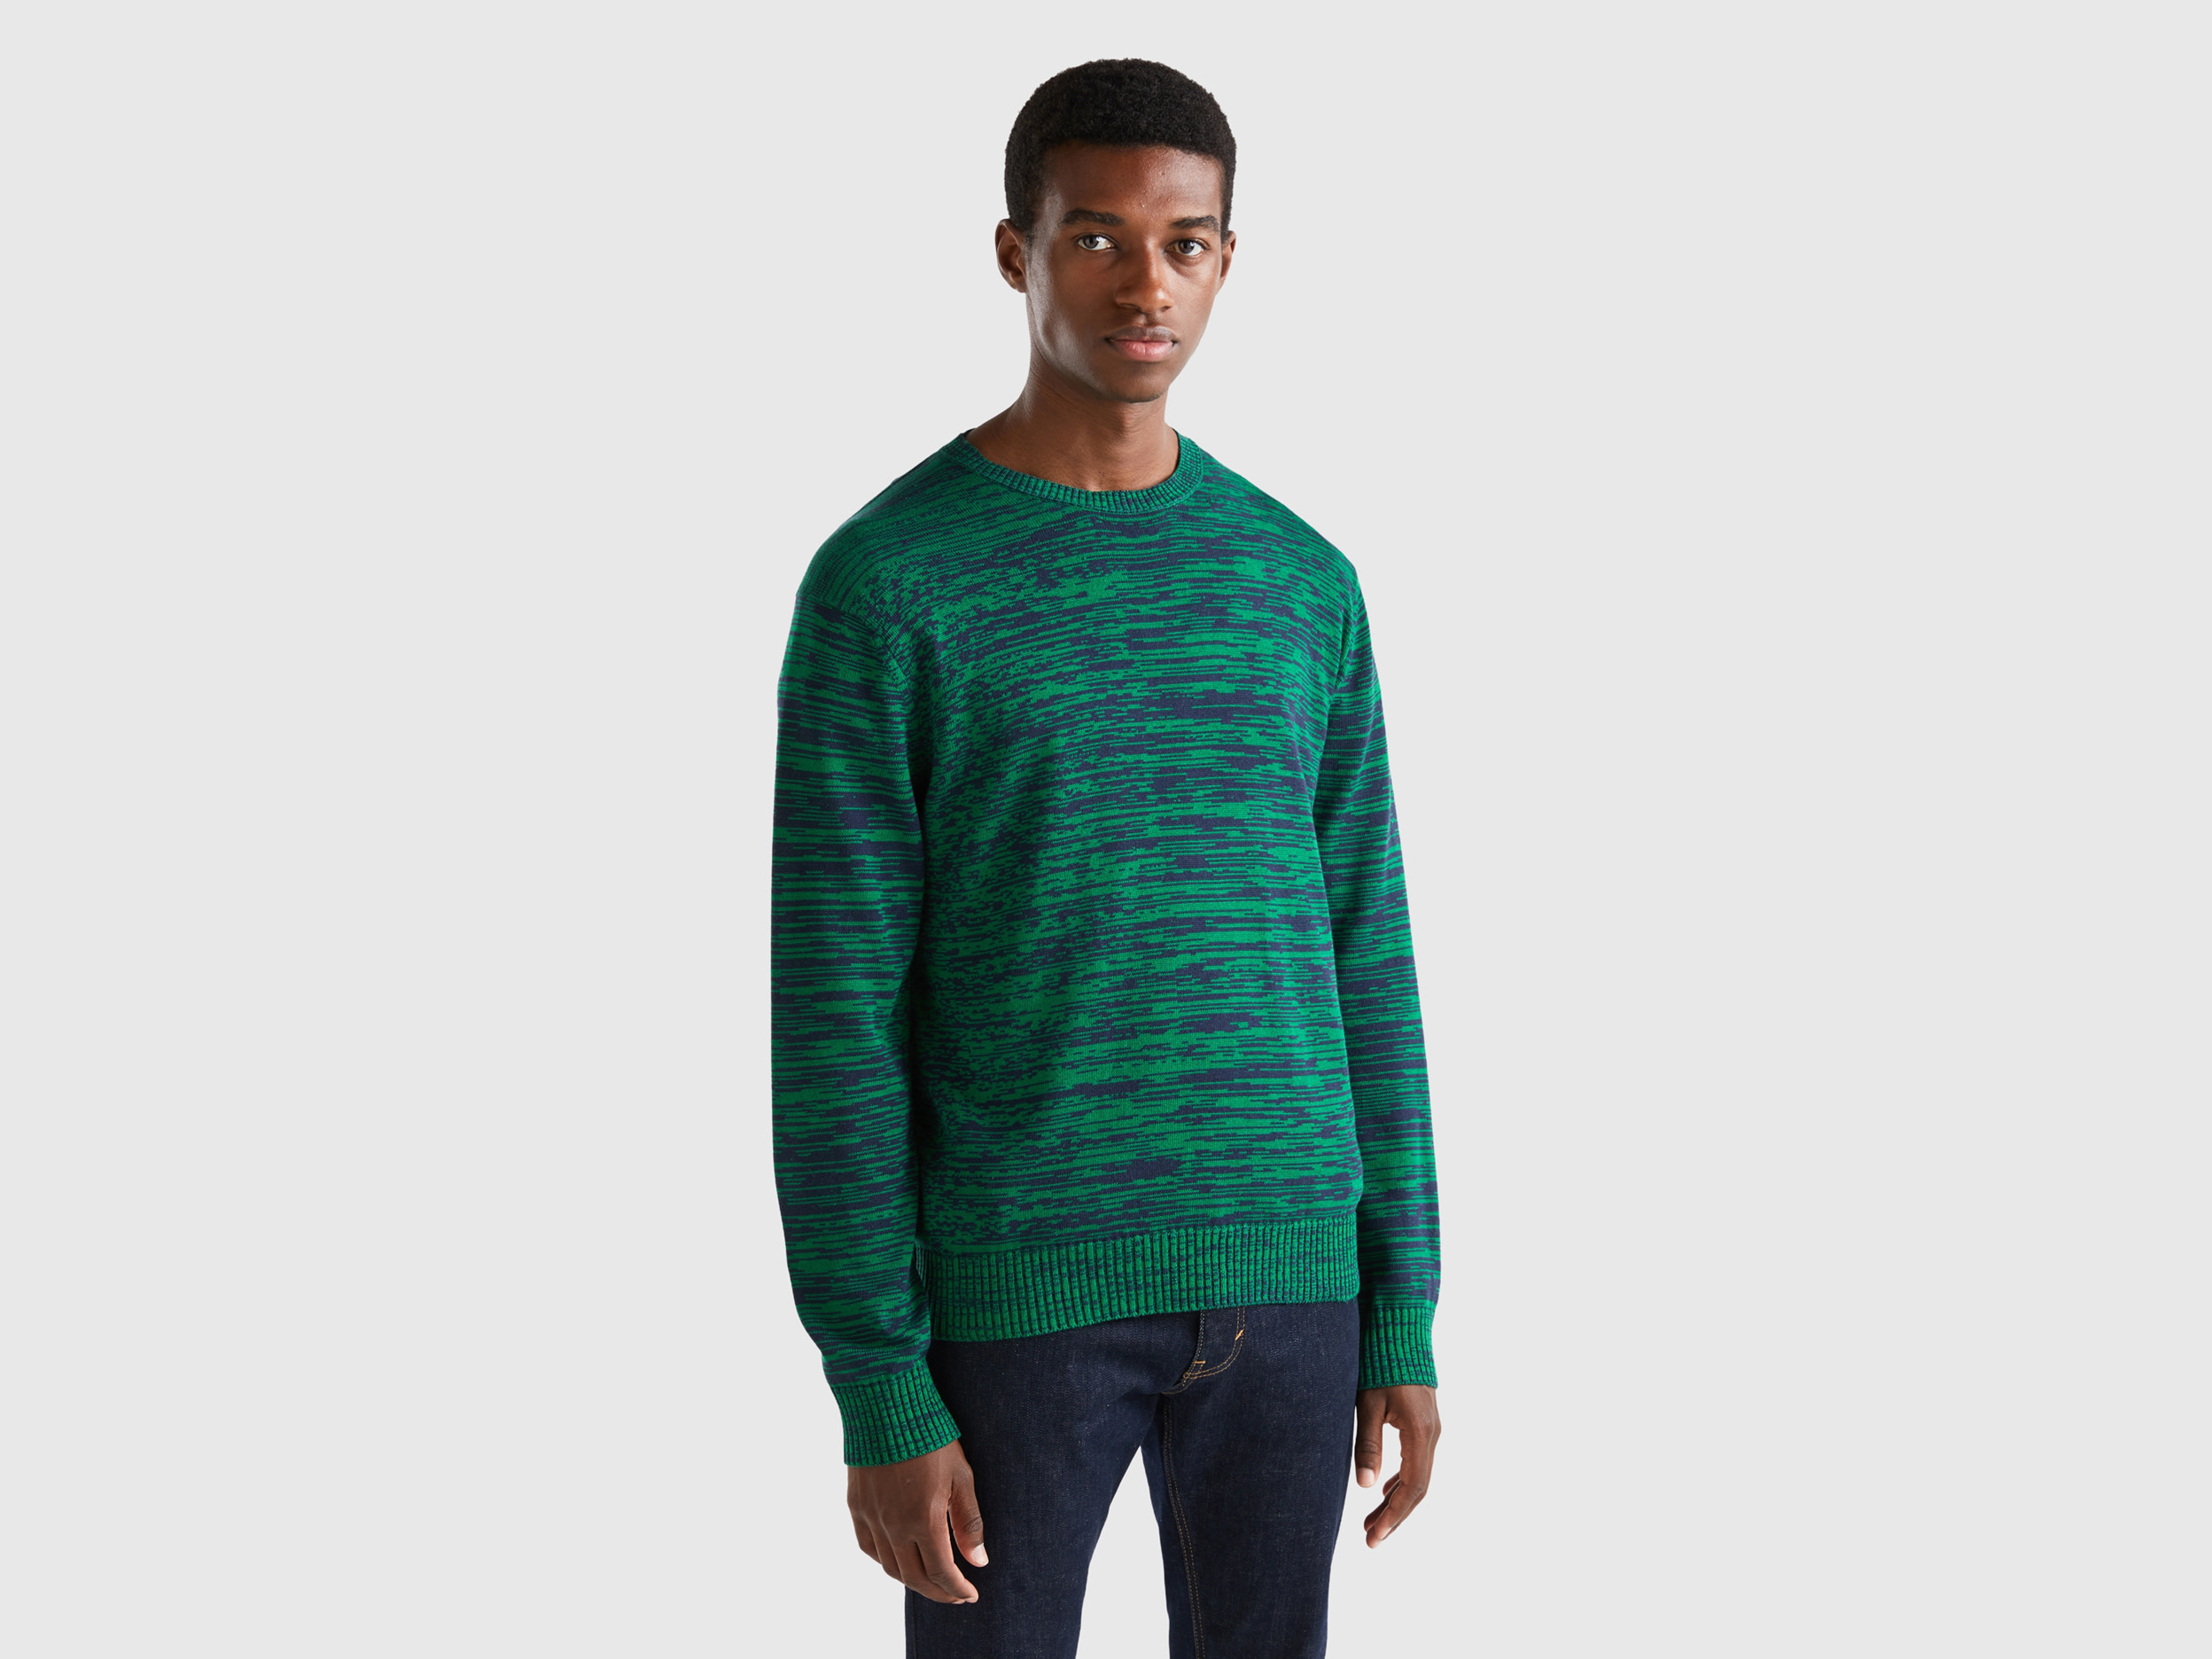 Benetton, Sweater With Striped Motif, size XXL, Green, Men